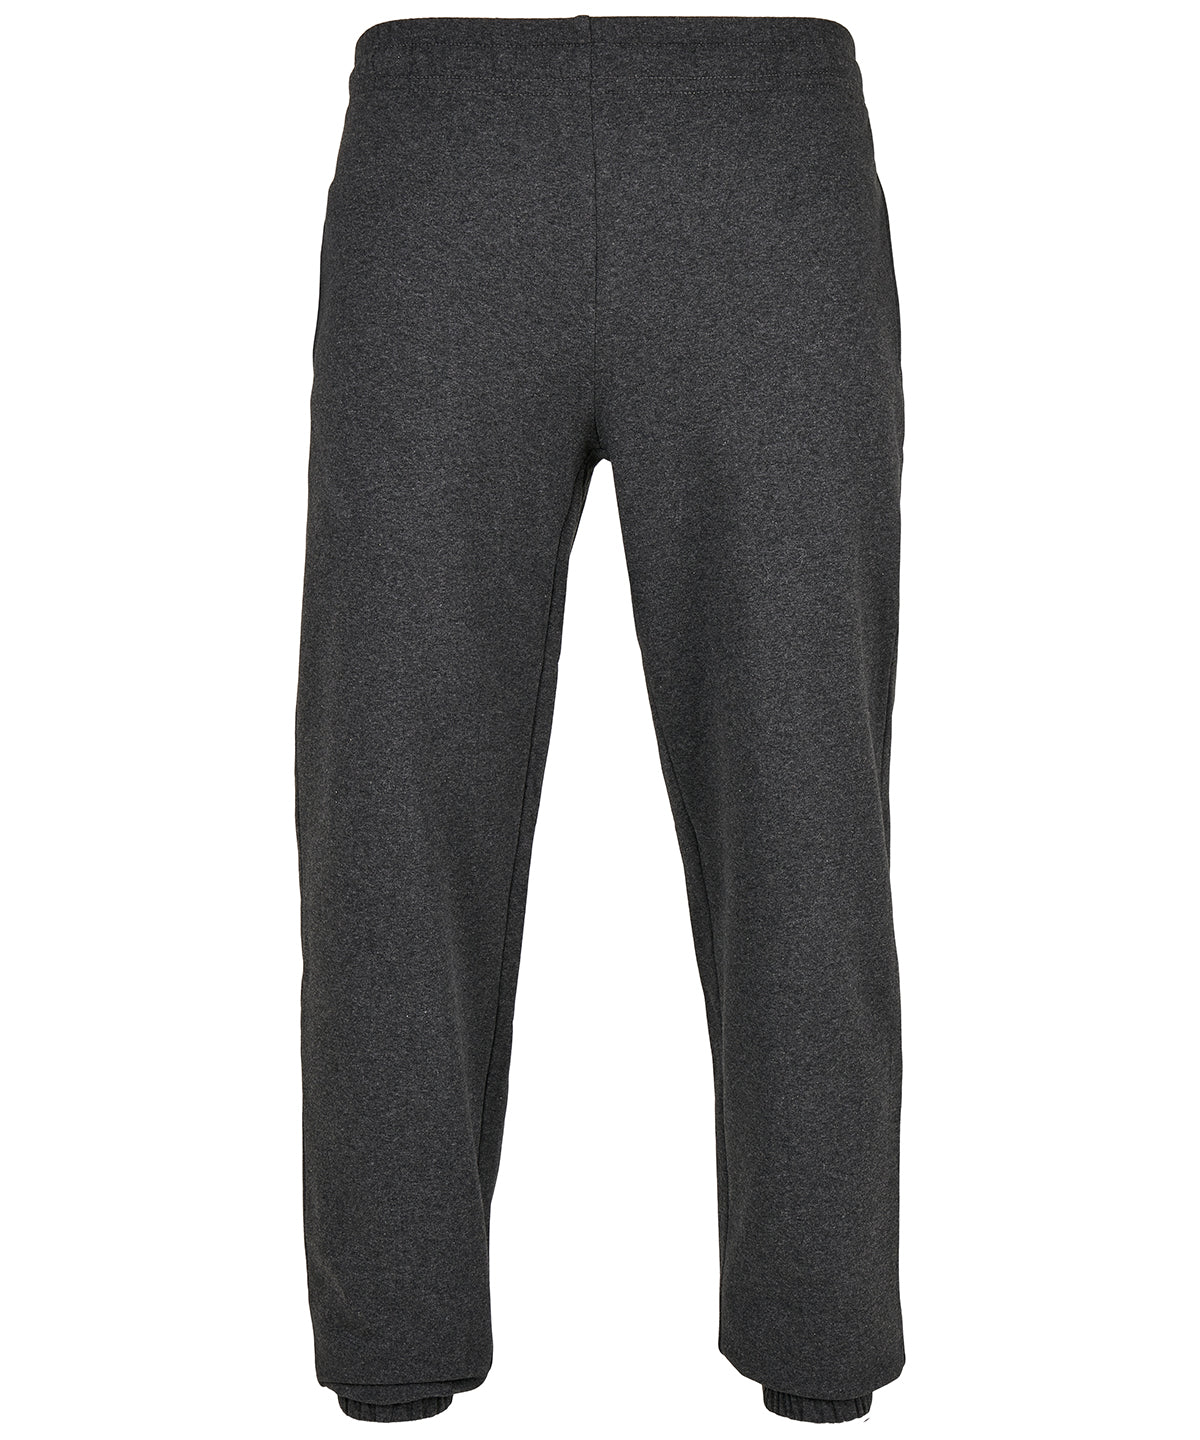 Personalised Sweatpants - Black Build Your Brand Basic Basic sweatpants